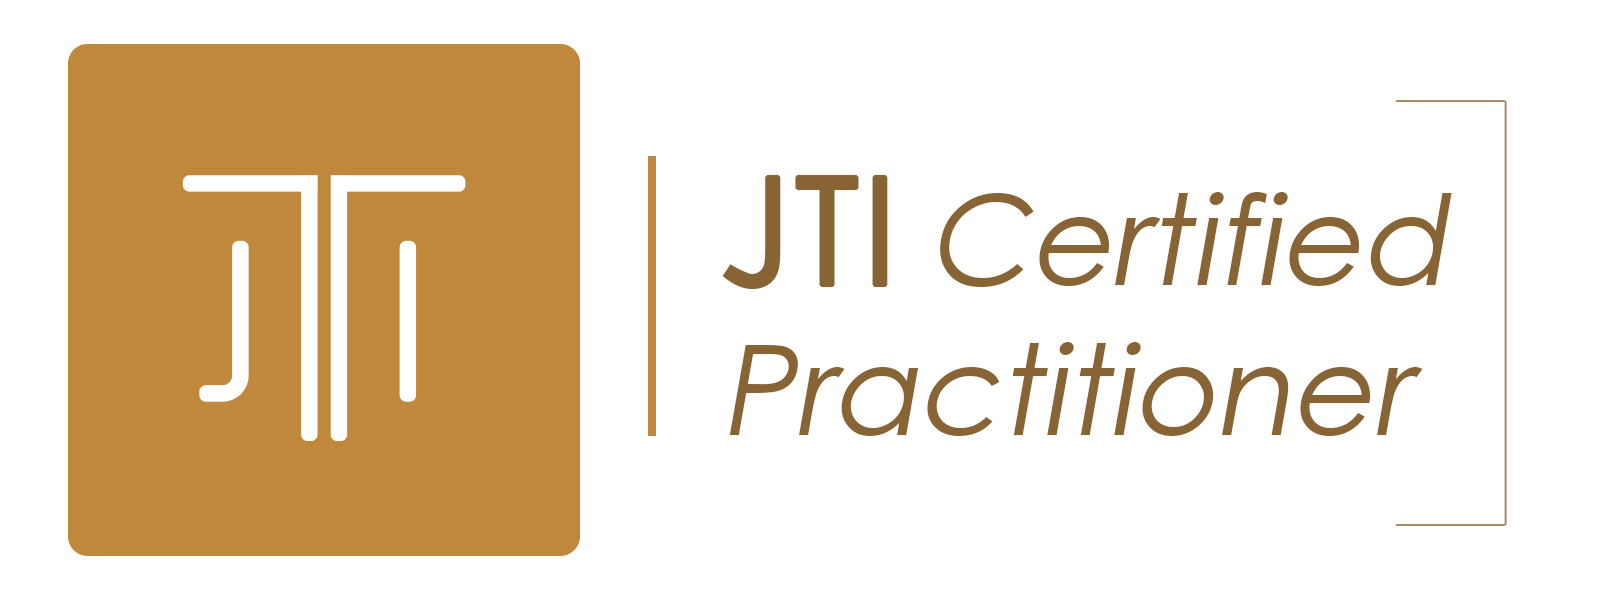 jti certified practitioner